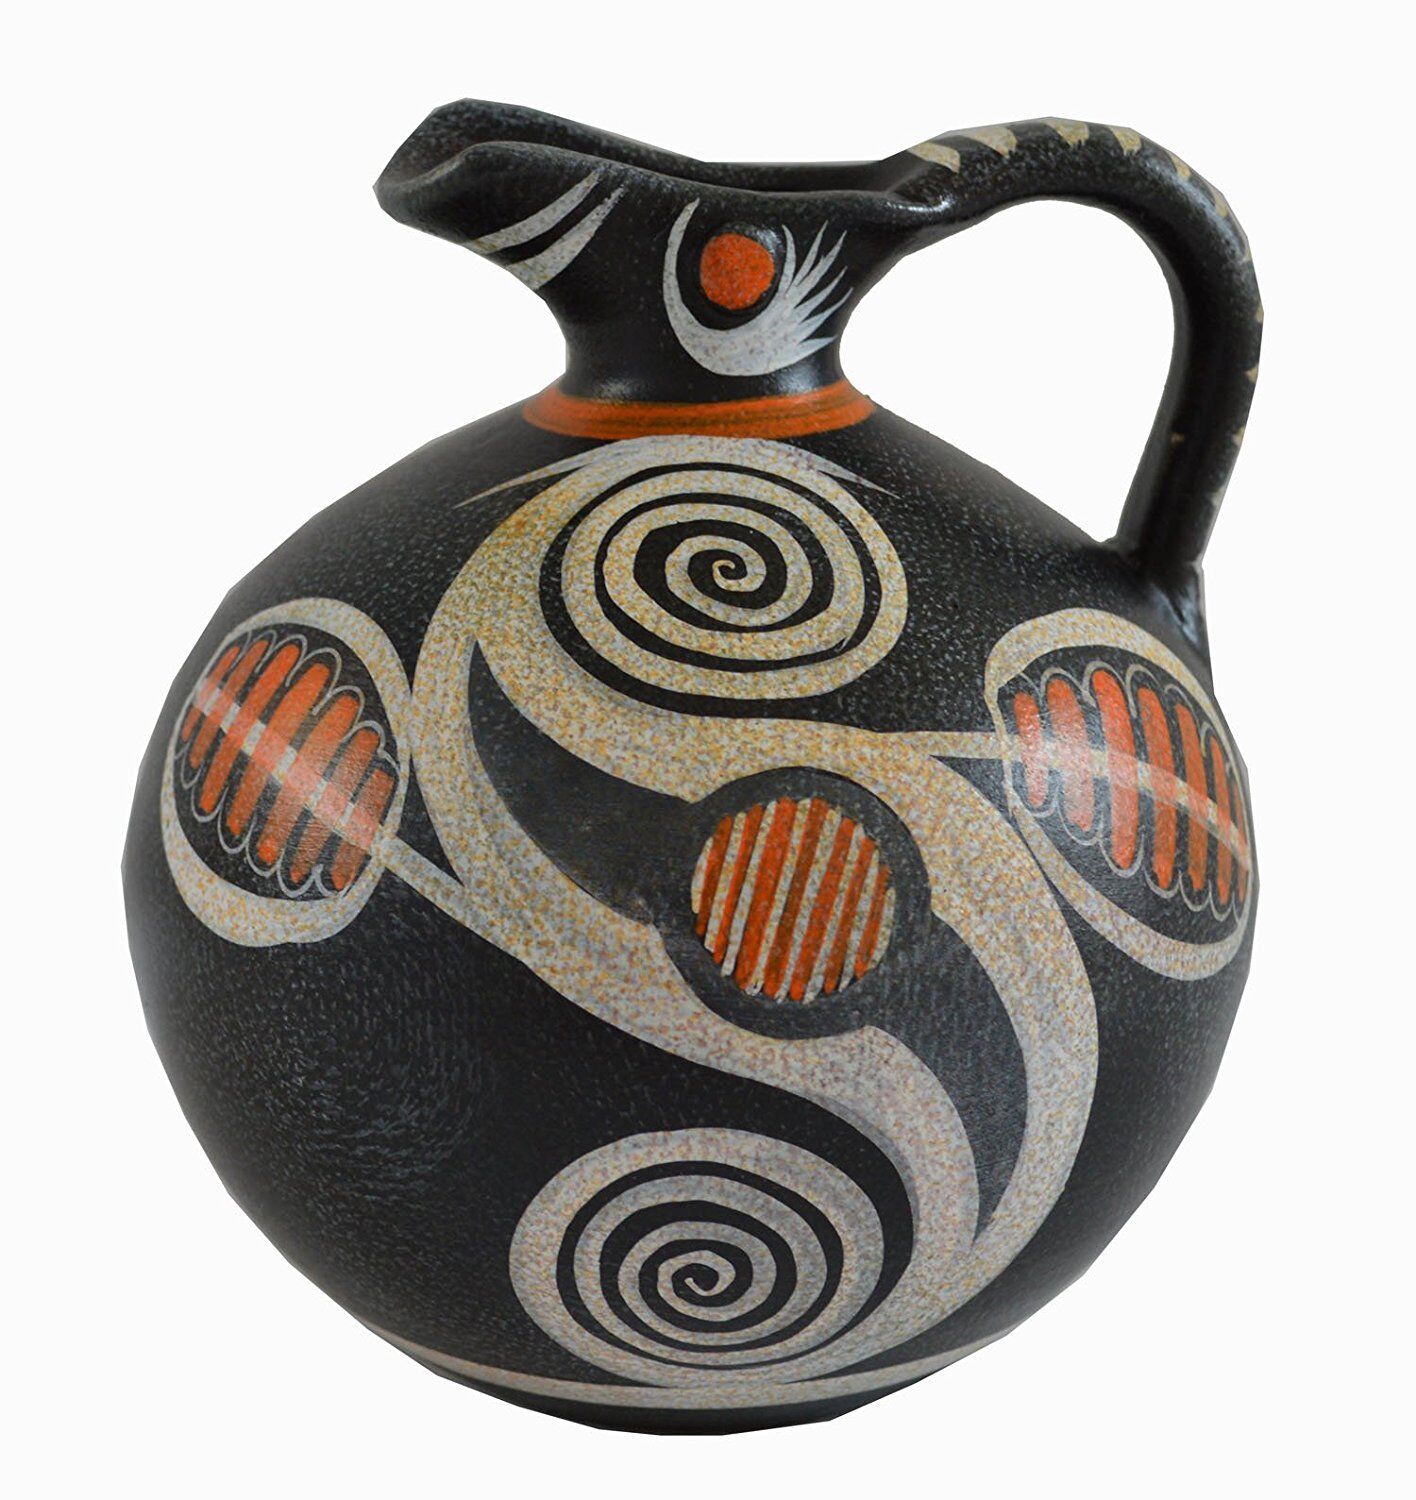 Minoan Pottery Kamares Oinochoe Vase - Museum Replica - Ancient Crete